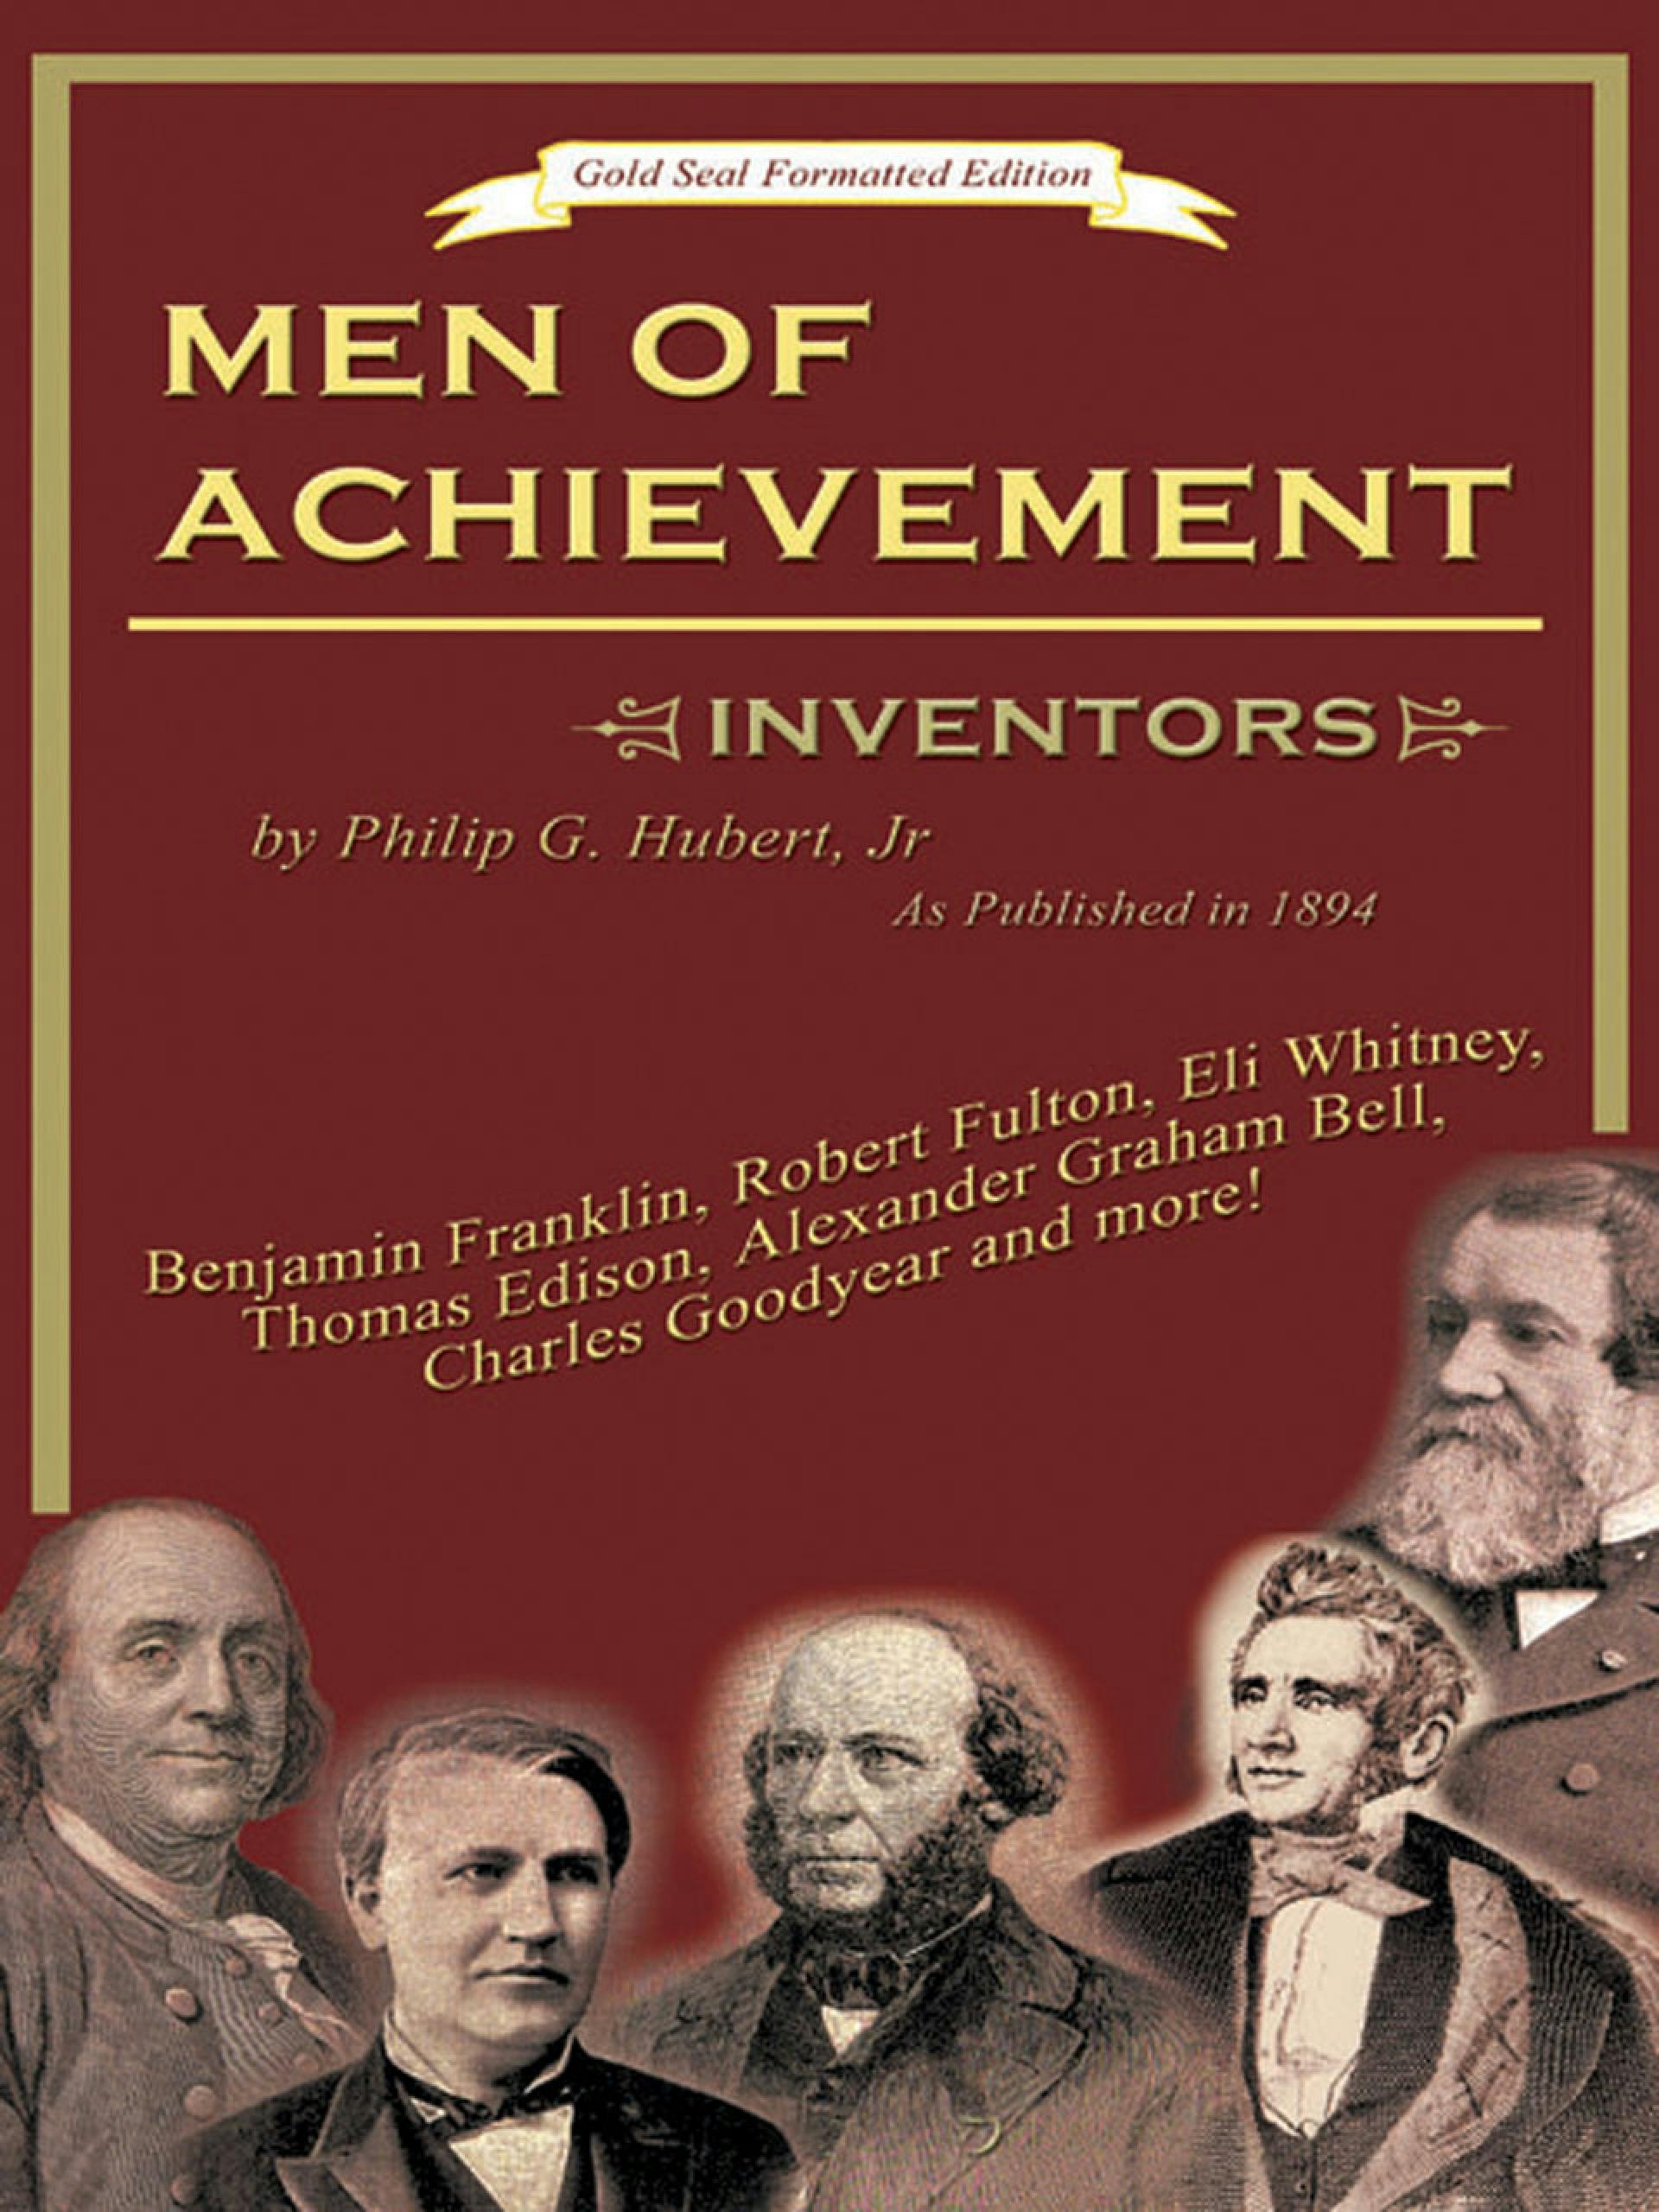 Men of Achievement Inventors - undefined